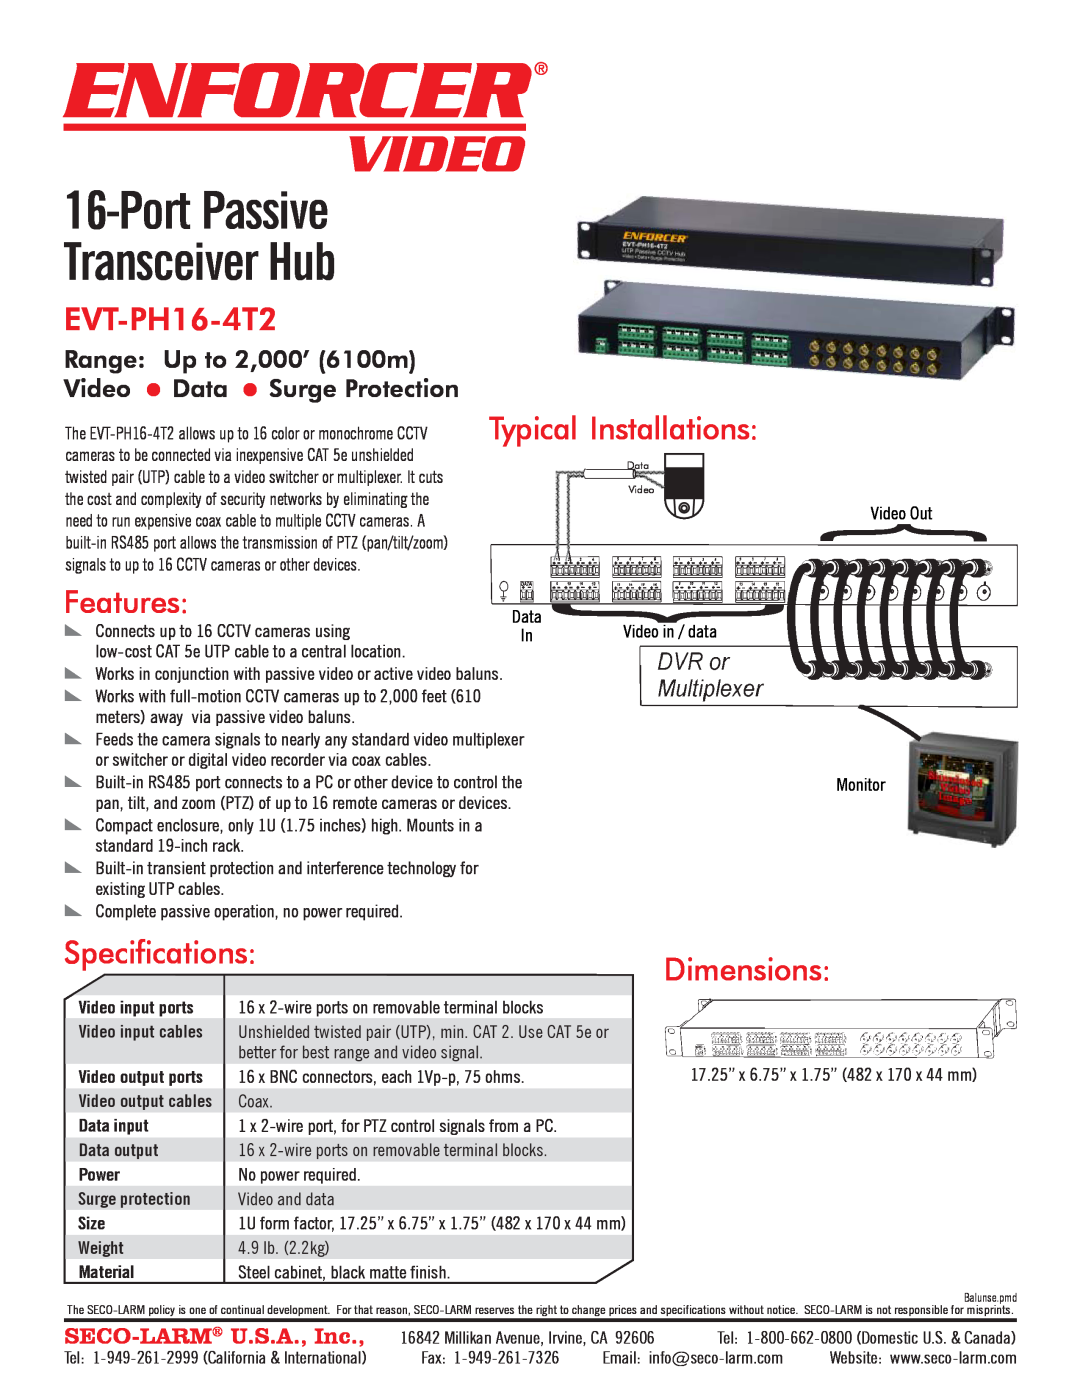 SECO-LARM USA EVT-PH16-4T2 dimensions Enforcer, Video, Port Passive Transceiver Hub, Features, Specifications, Dimensions 